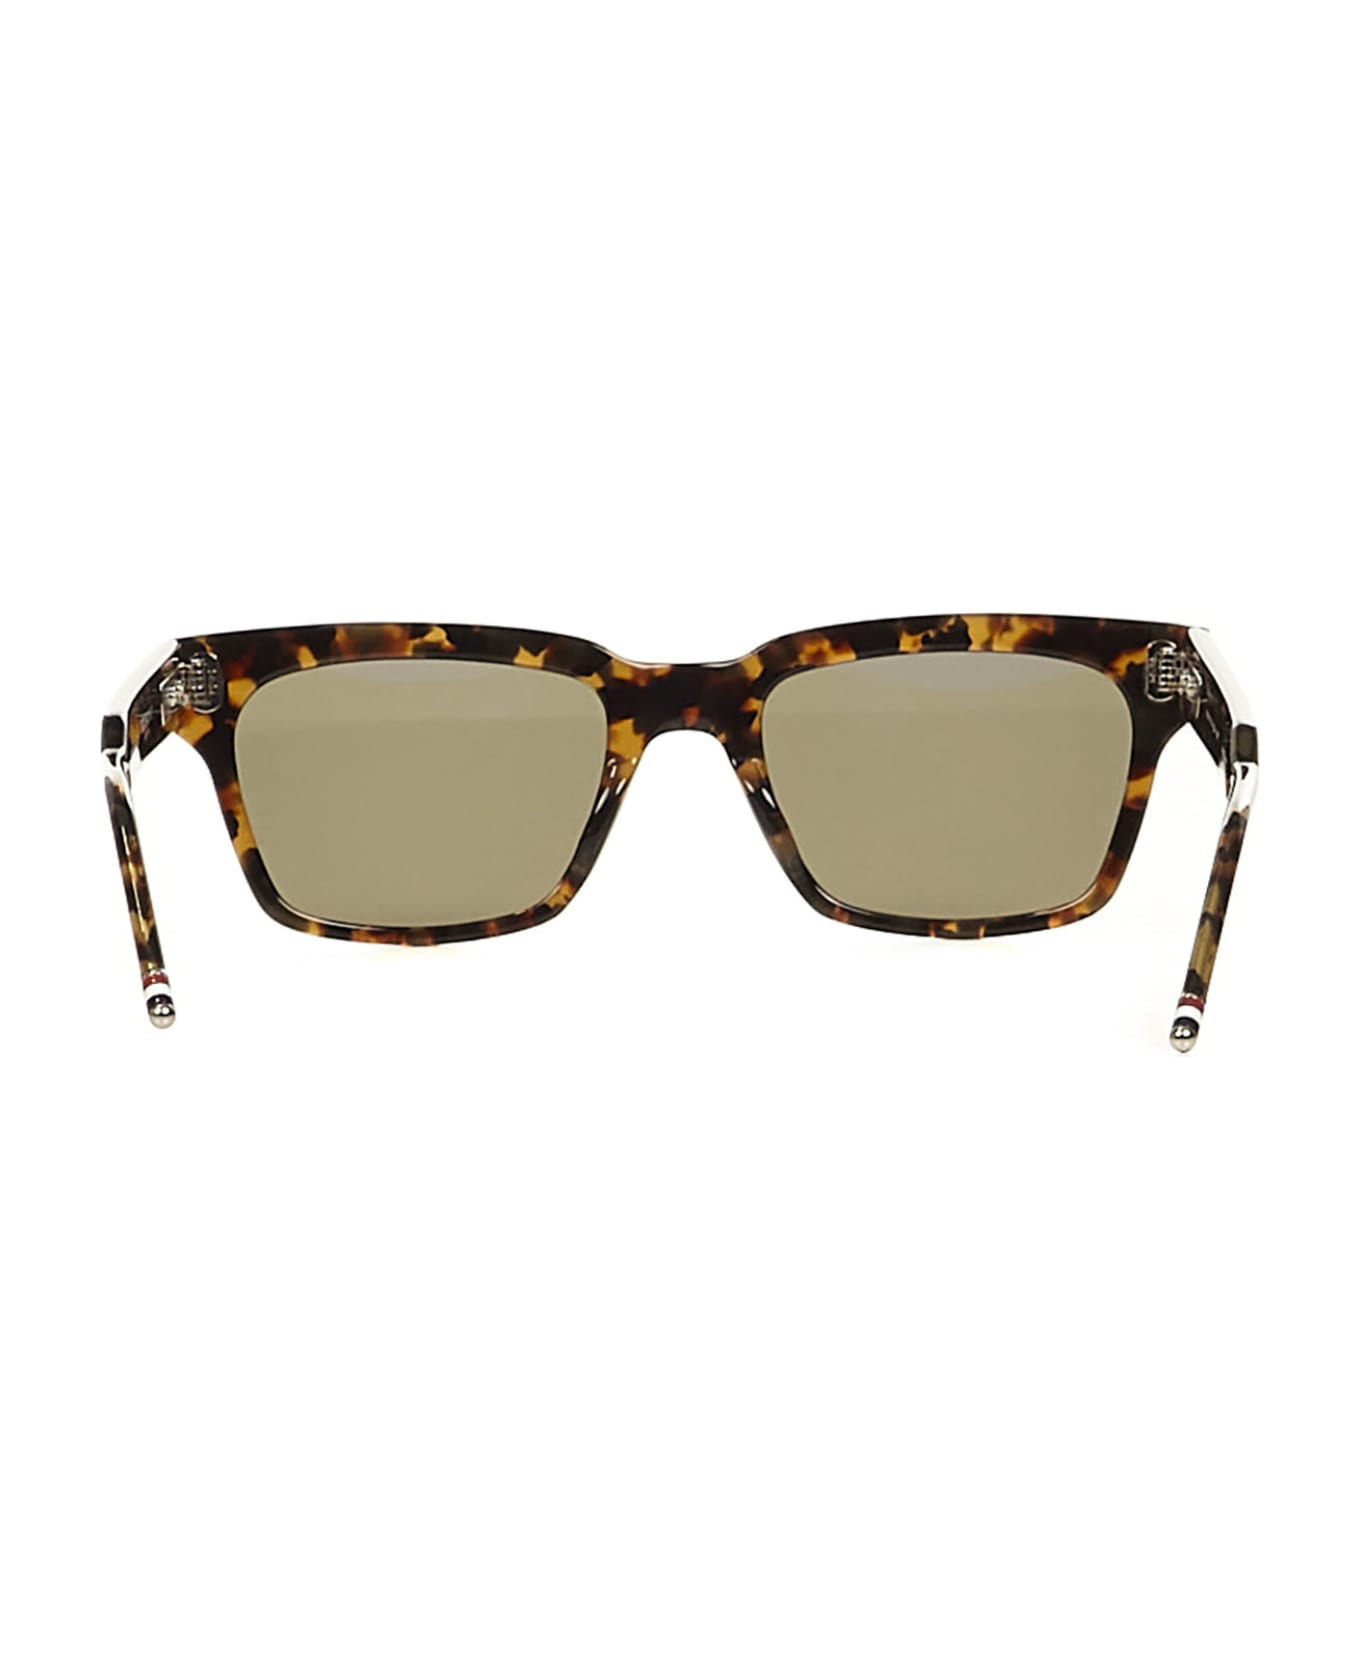 Thom Browne Sunglasses Tb418 Sunglasses - Brown